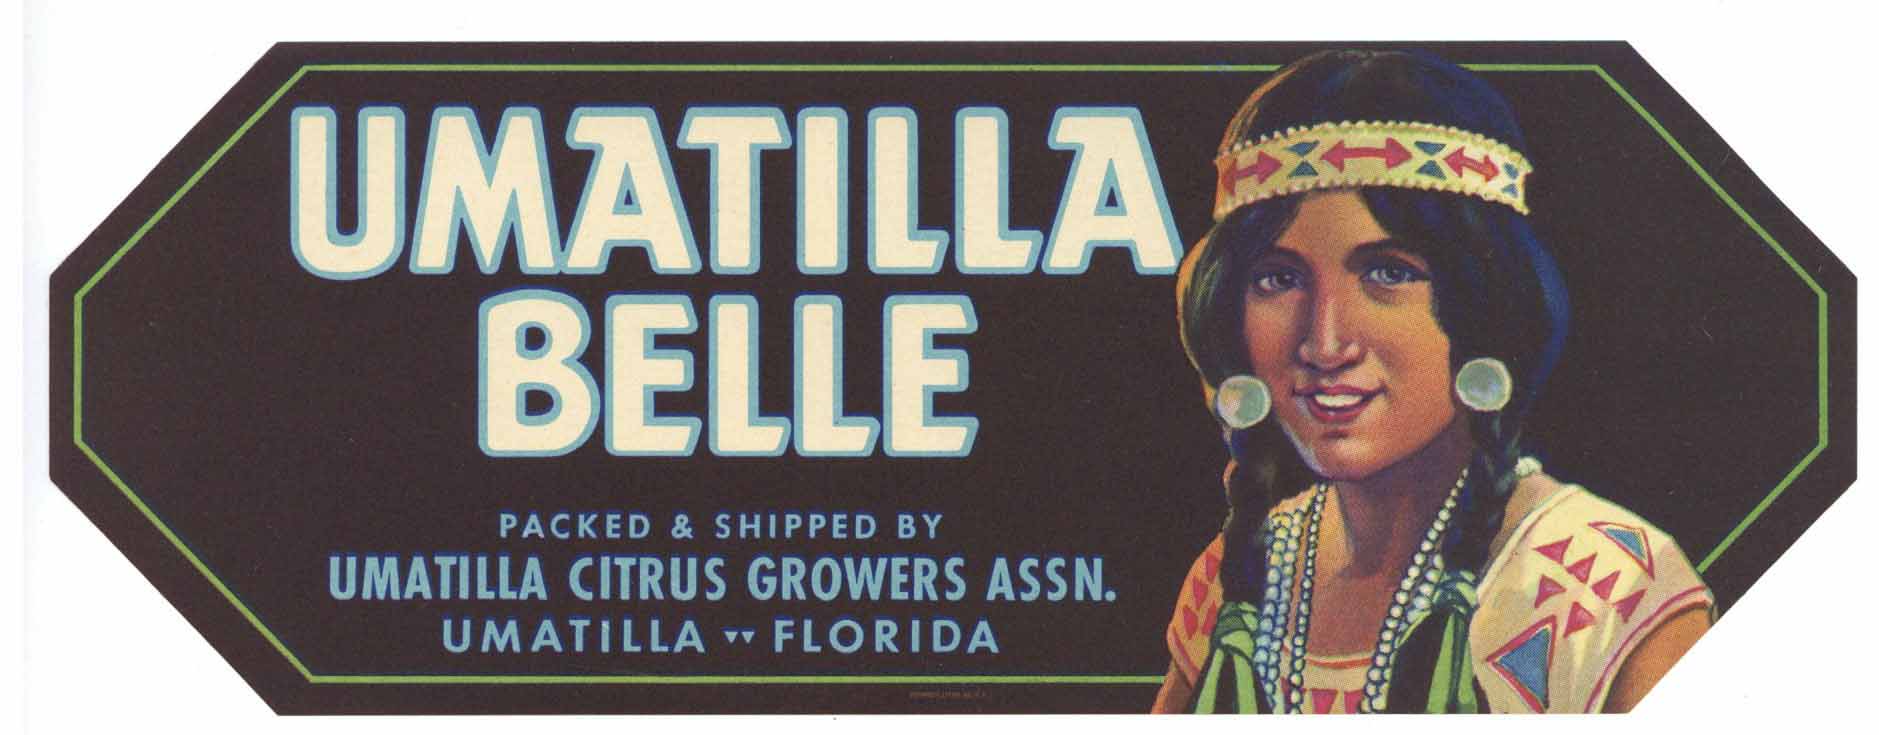 Umatilla Belle Brand Vintage Florida Citrus Crate Label